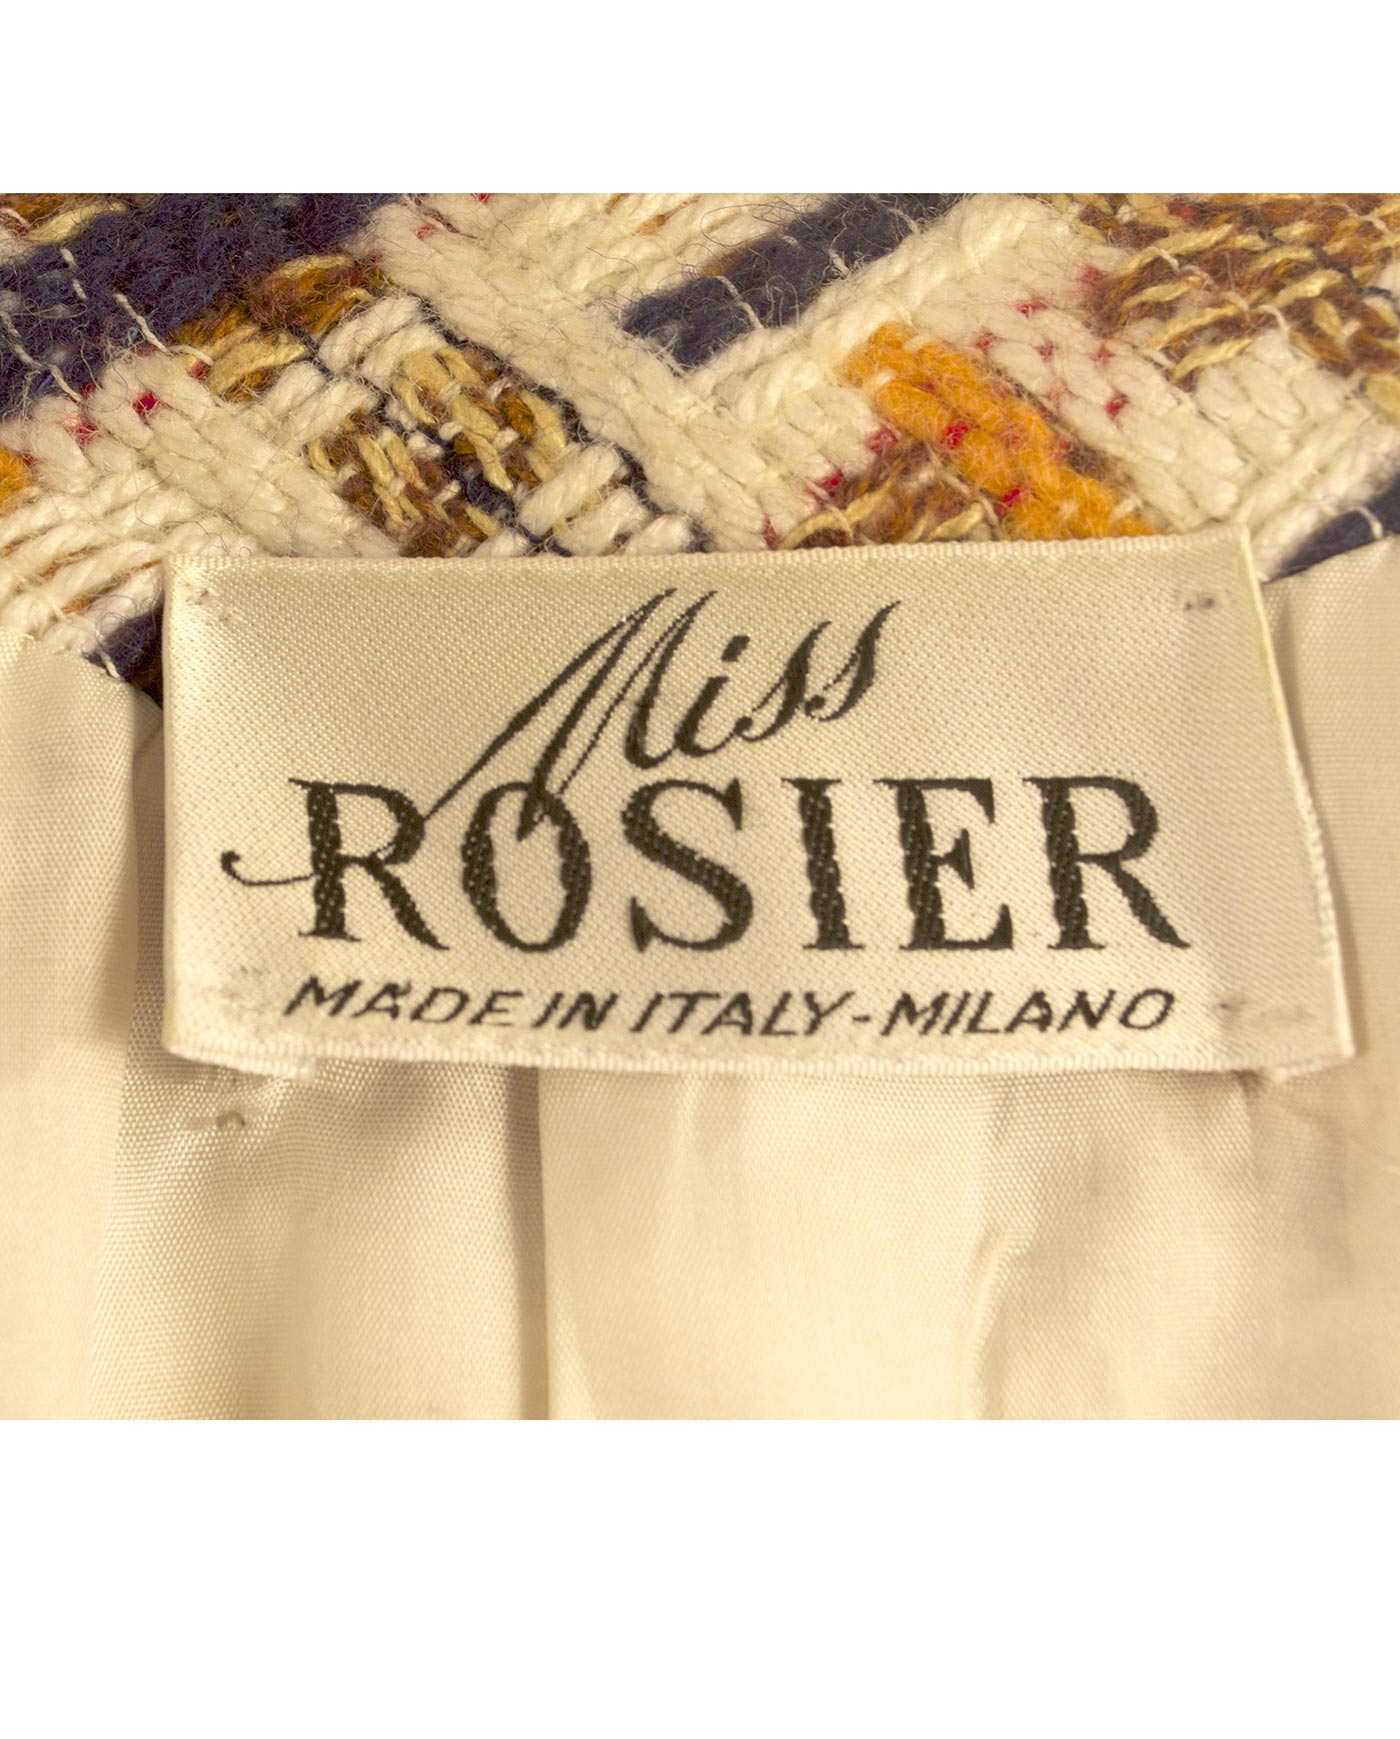 MISS ROSIER pure wool coat 60/70s